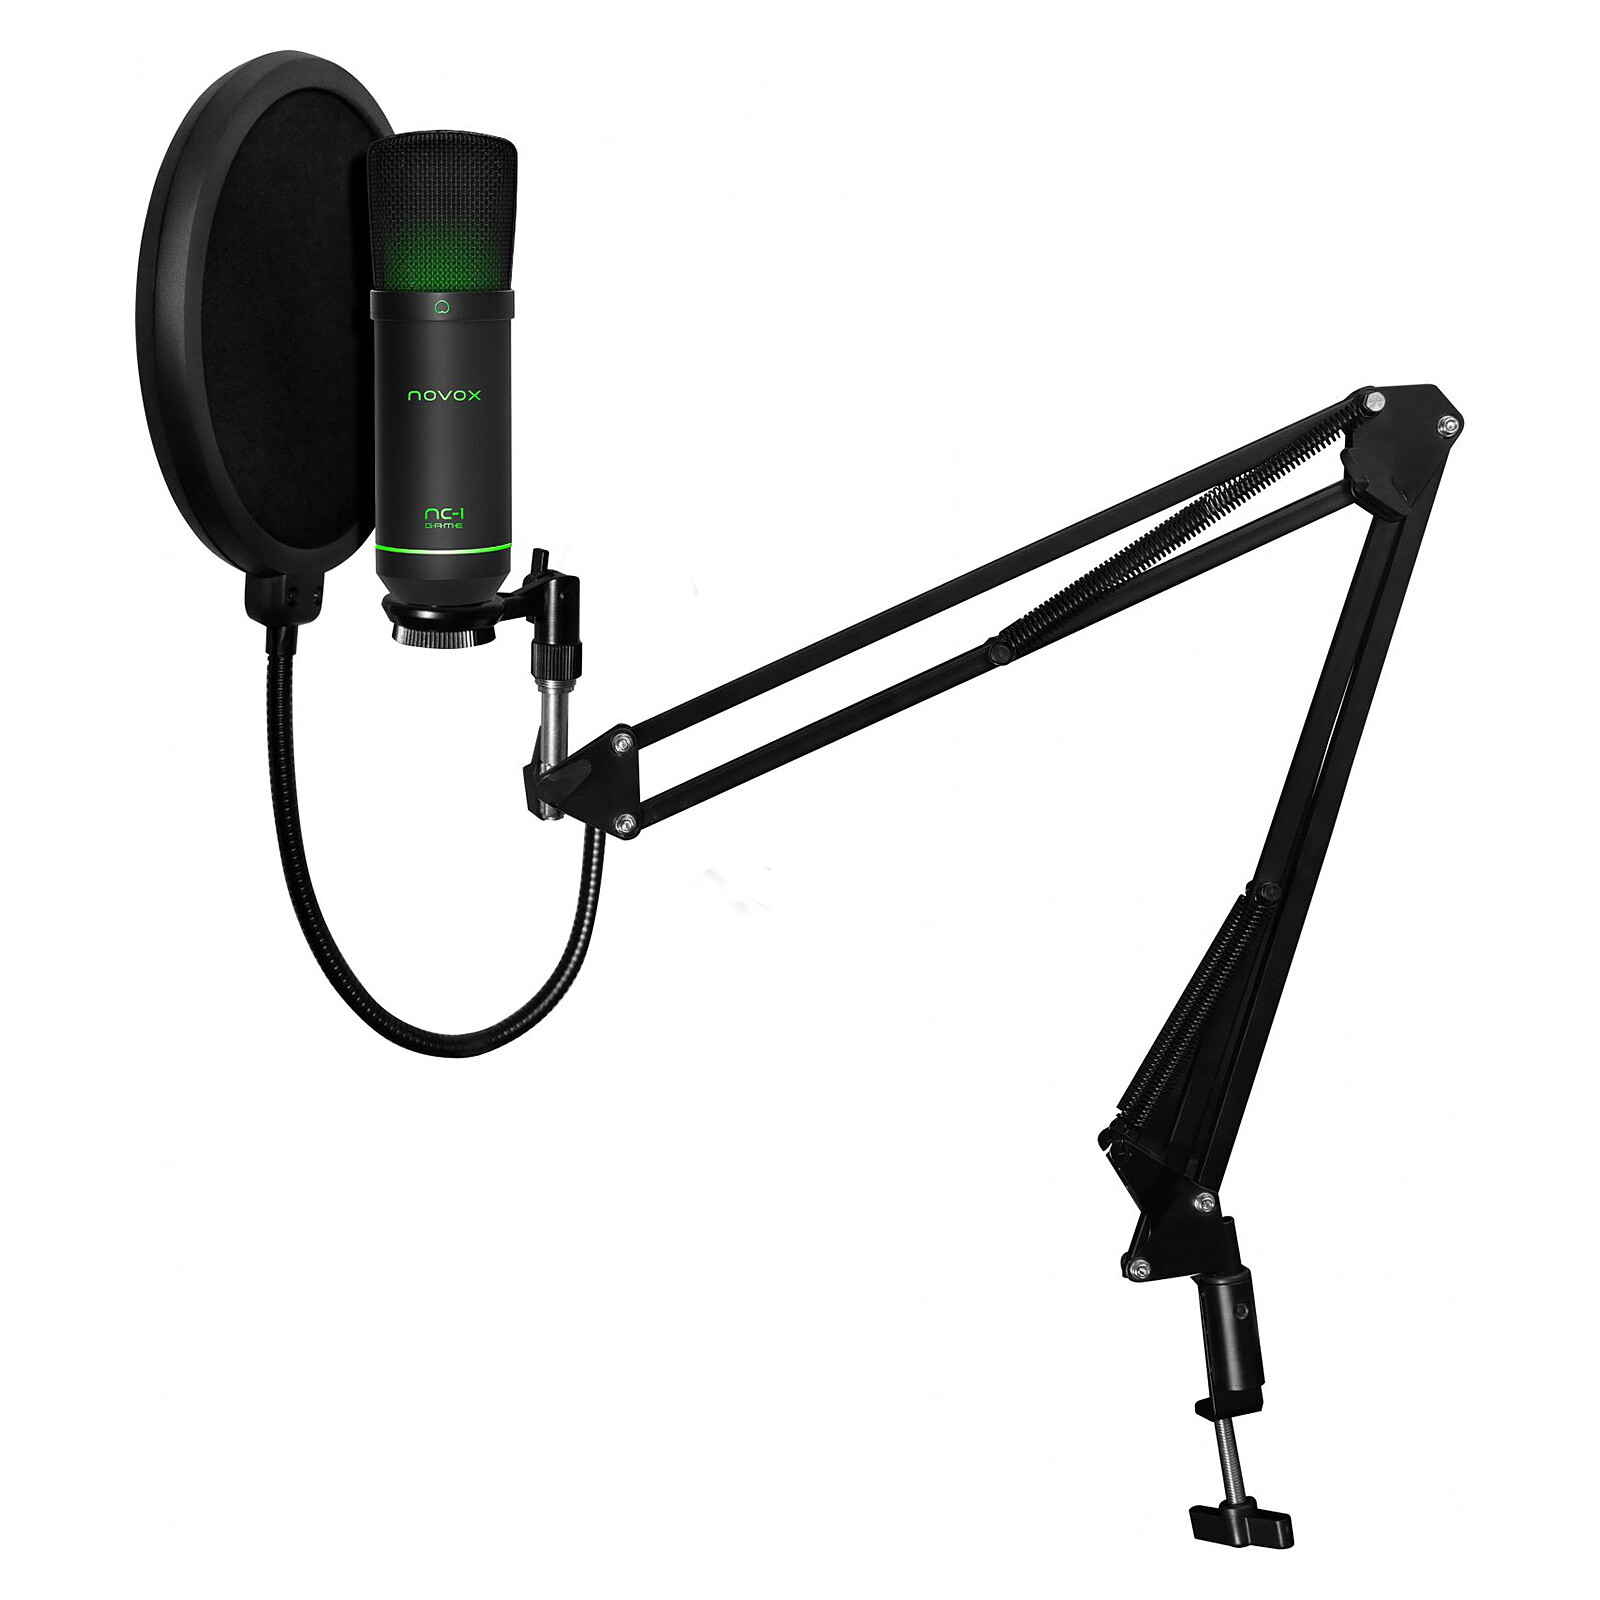 Novox NC-1 Game Box - Microphone - LDLC 3-year warranty